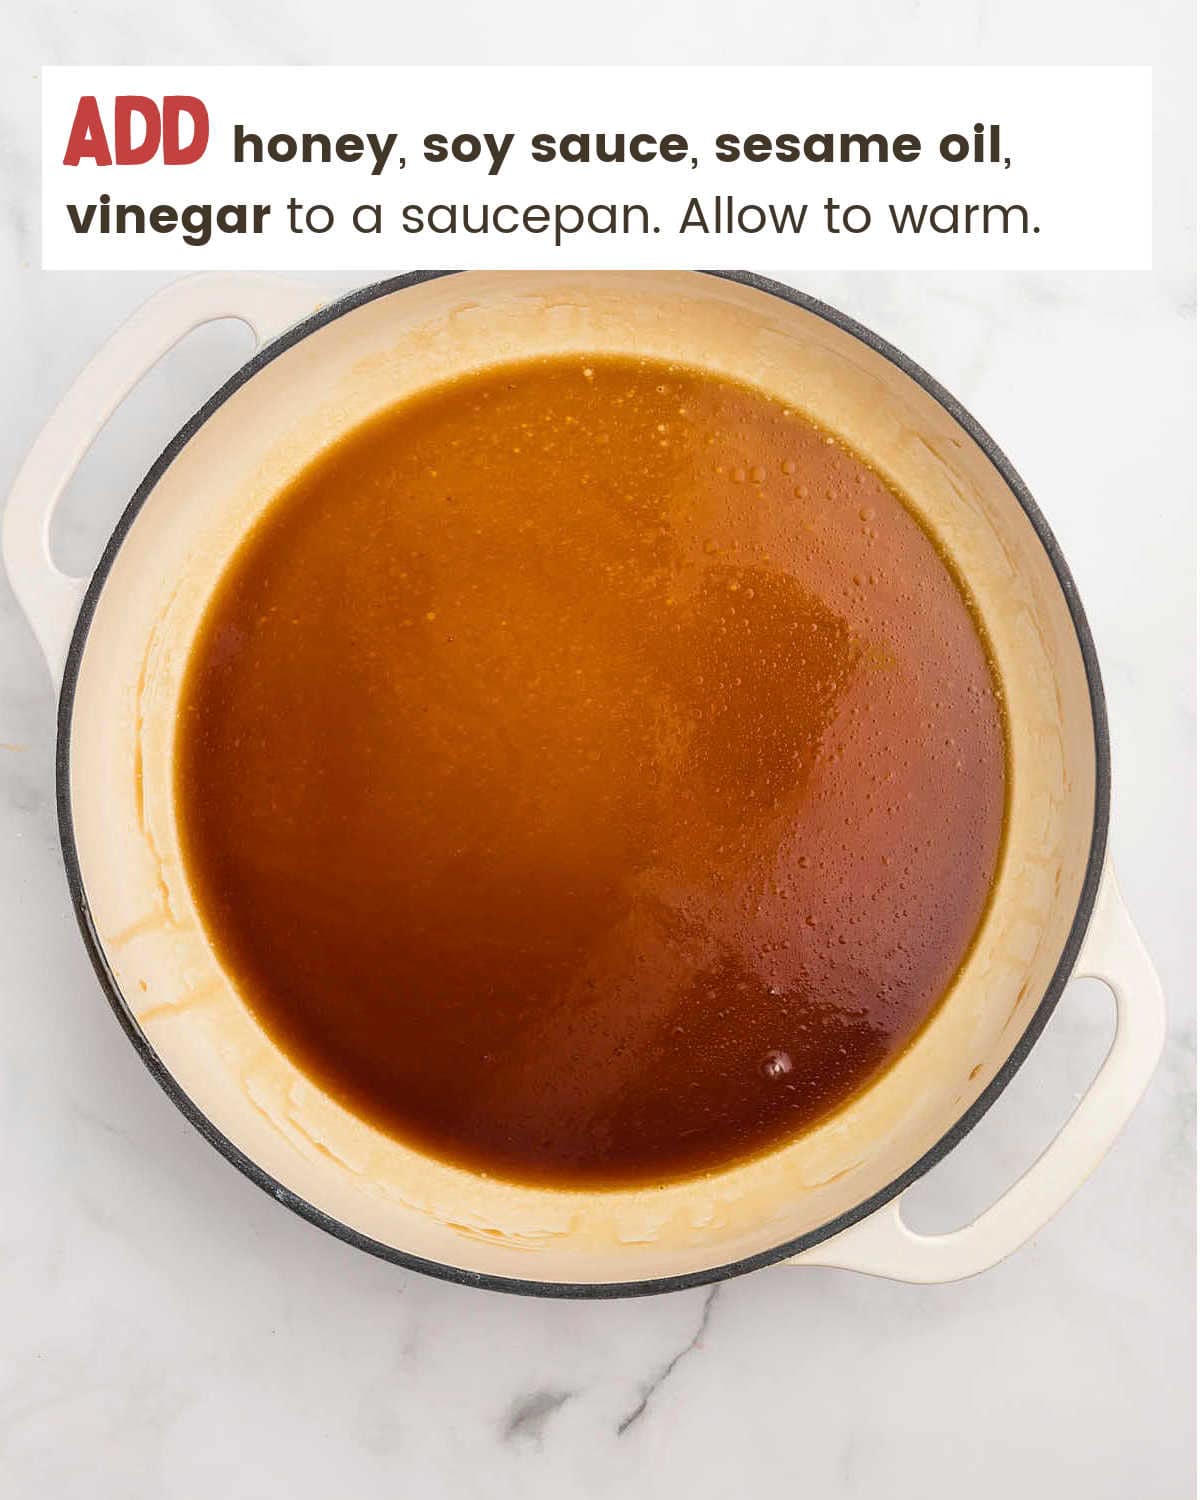 Add honey, sesame oil, and vinegar to a saucepan for Honey Garlic Chicken